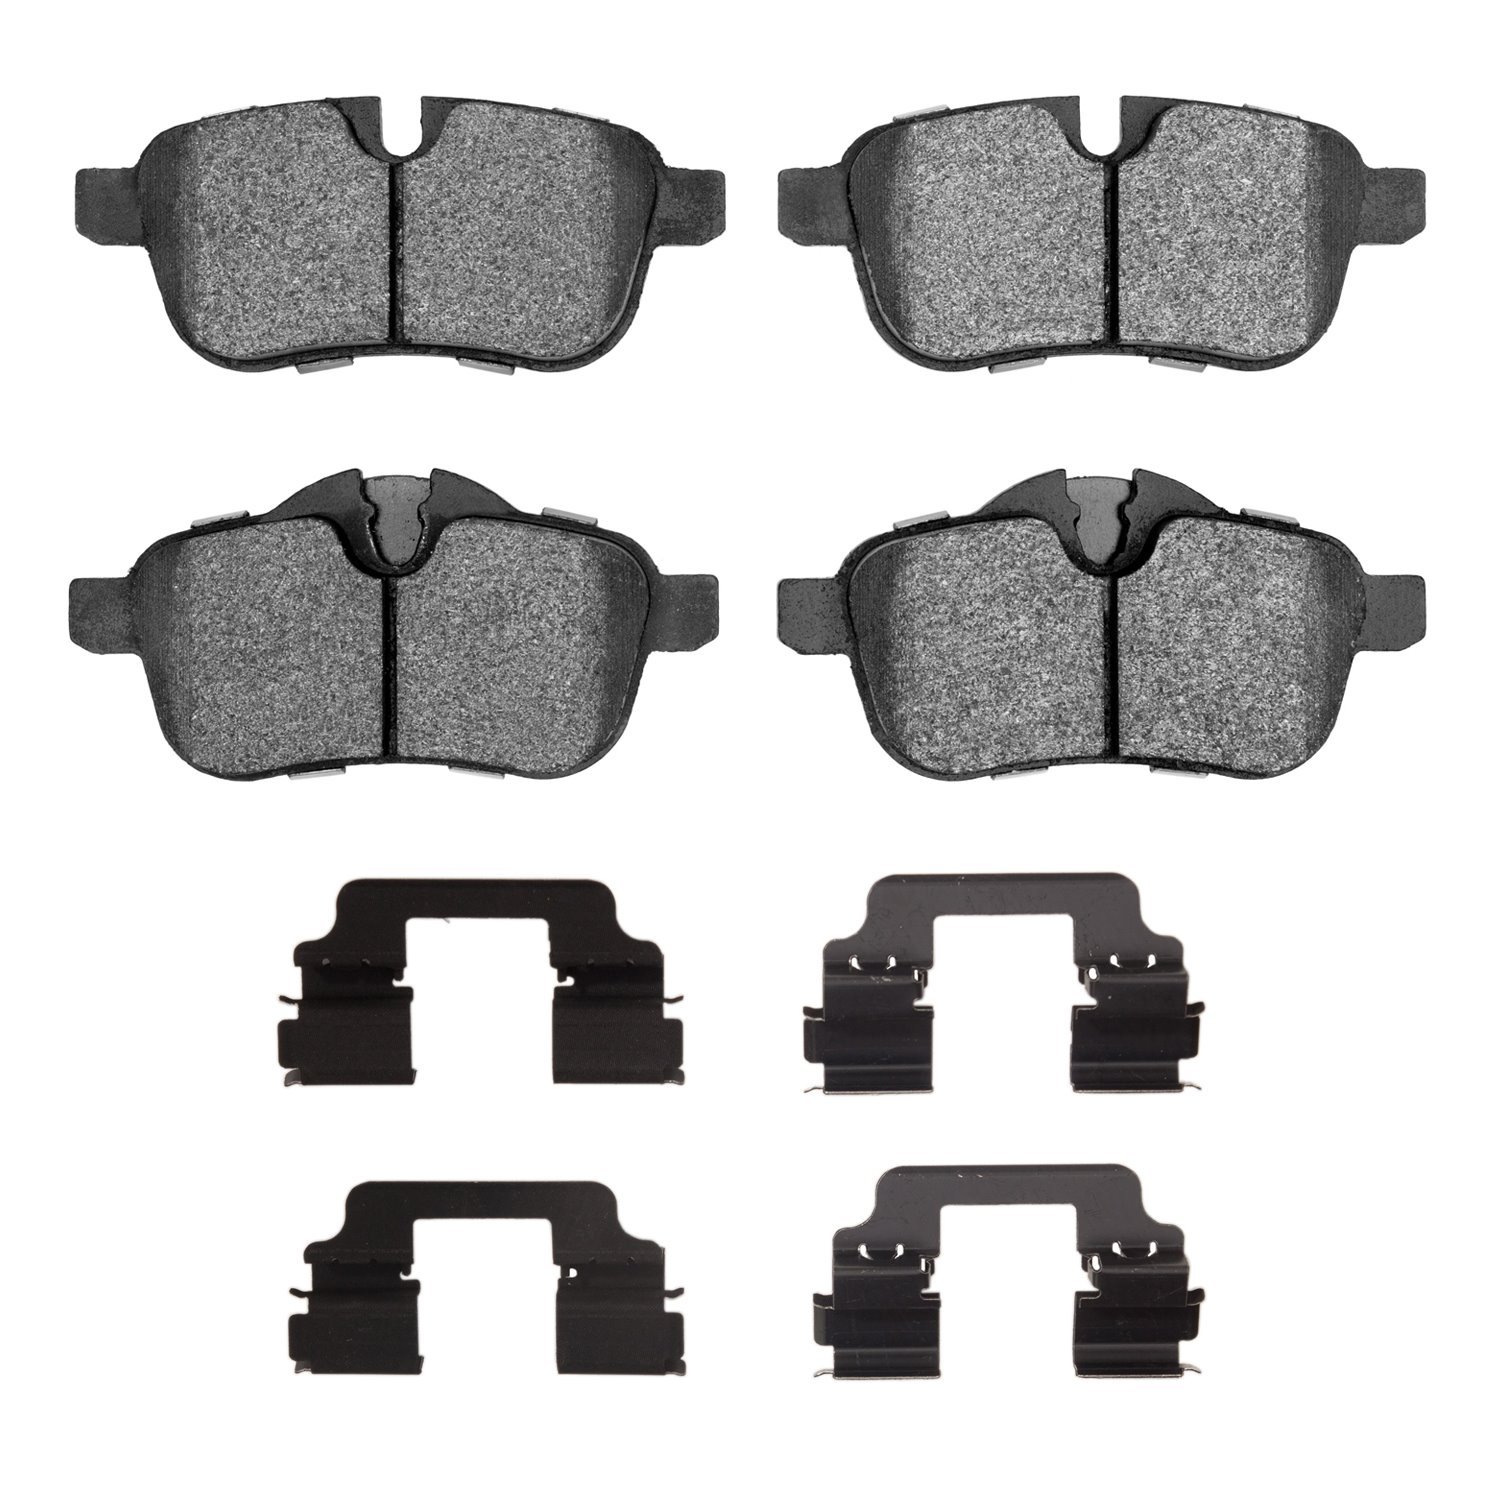 1551-1433-01 5000 Advanced Low-Metallic Brake Pads & Hardware Kit, 2009-2010 BMW, Position: Rear